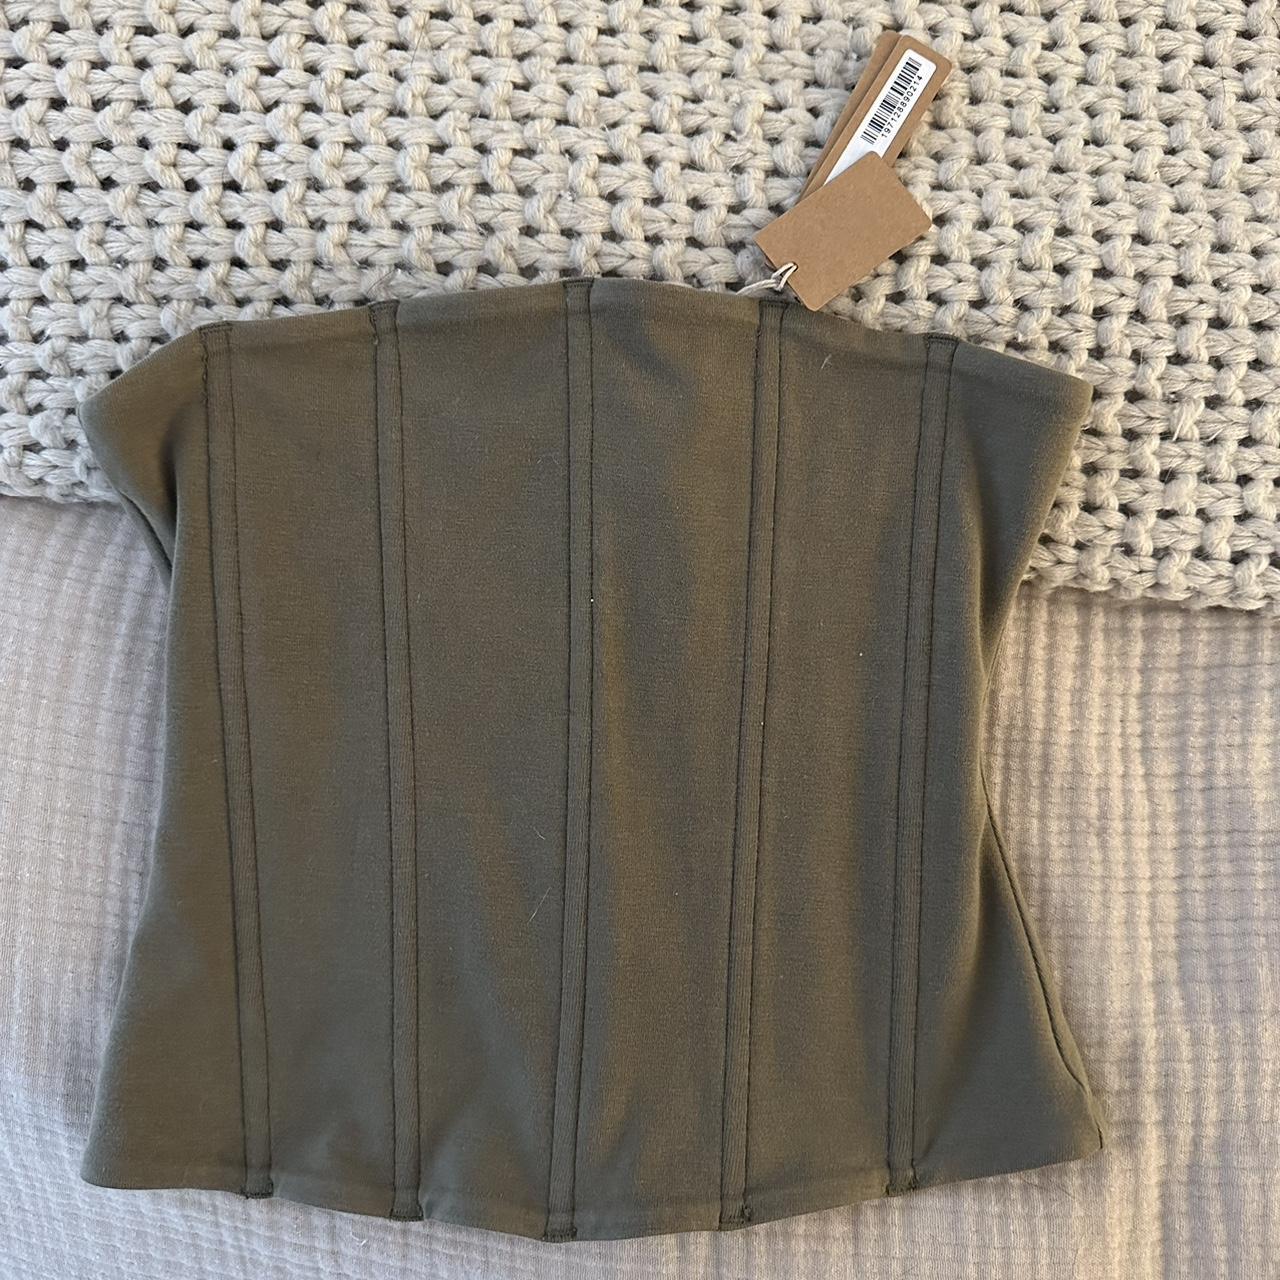 Skims cotton corset top in size S Won't wear again - Depop